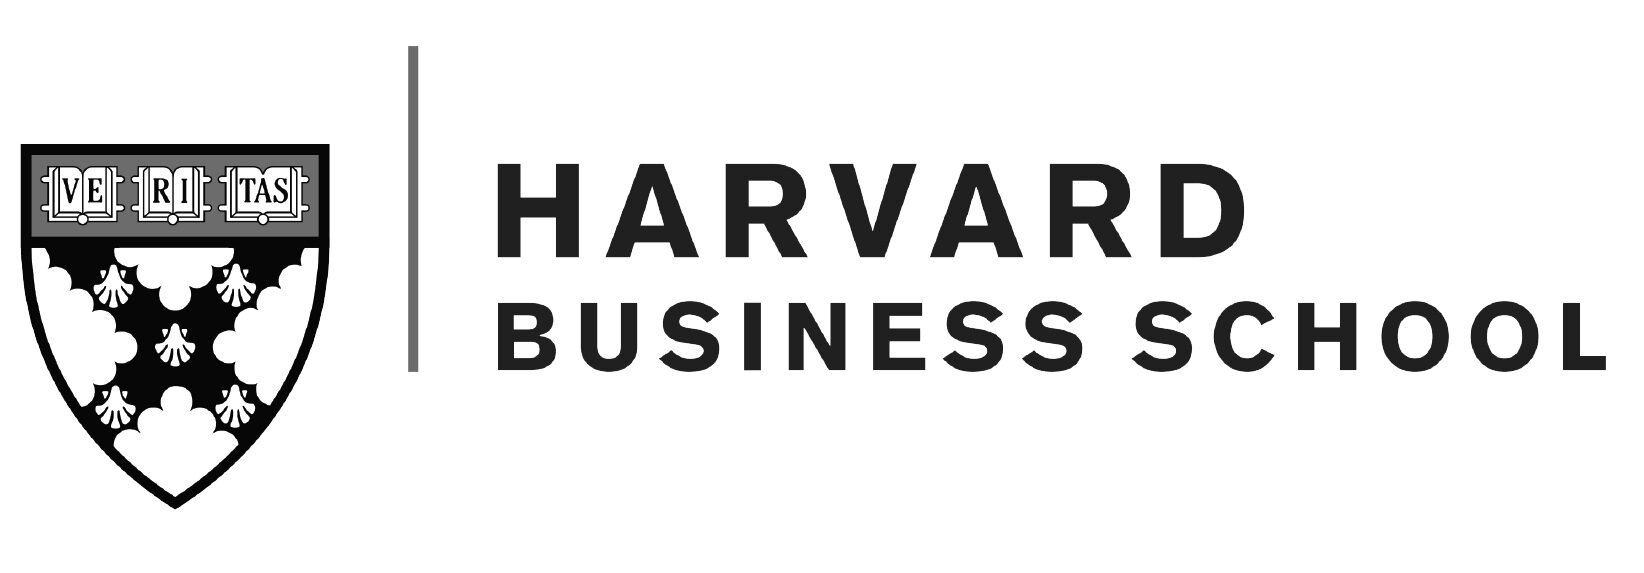 Harvard_Business_School_Logo_1.jpg